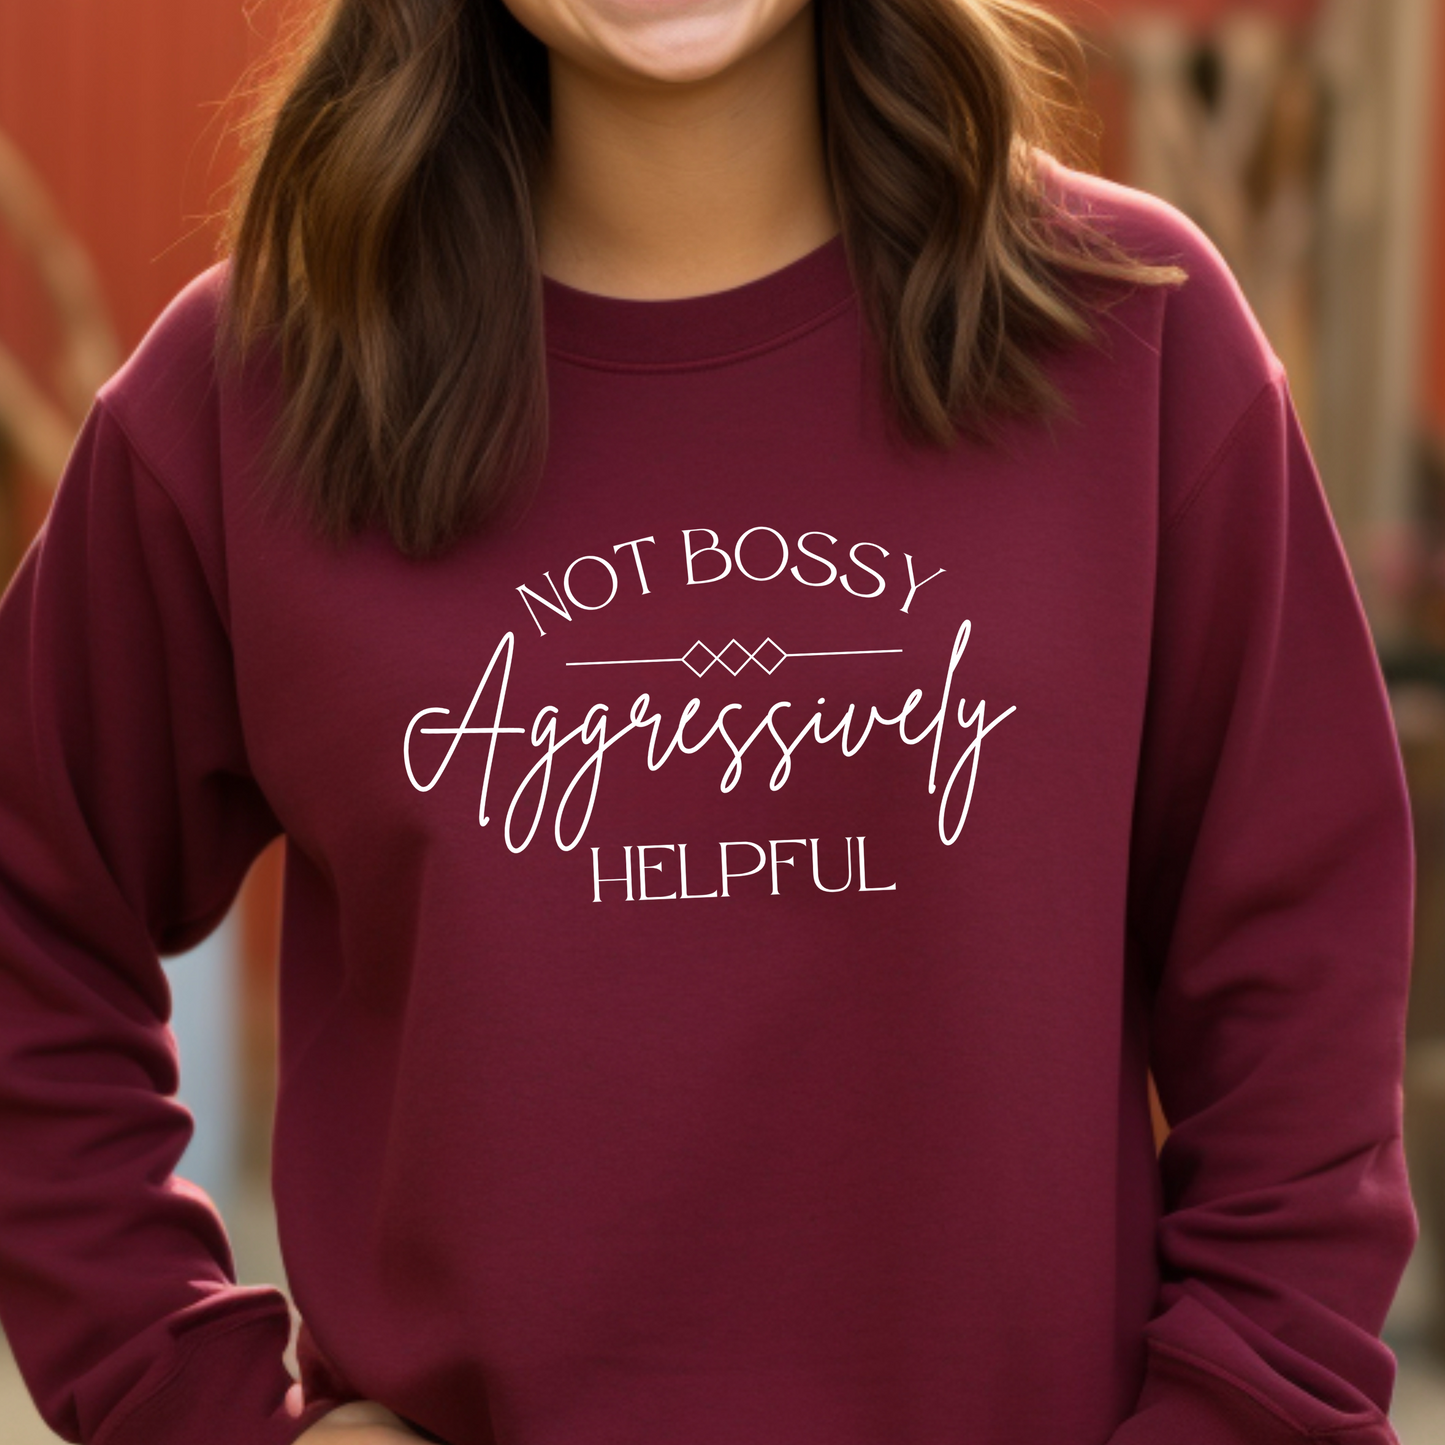 Cozy, Stylish, and Sarcastic Sweatshirt - Not Bossy, Aggressively Helpful